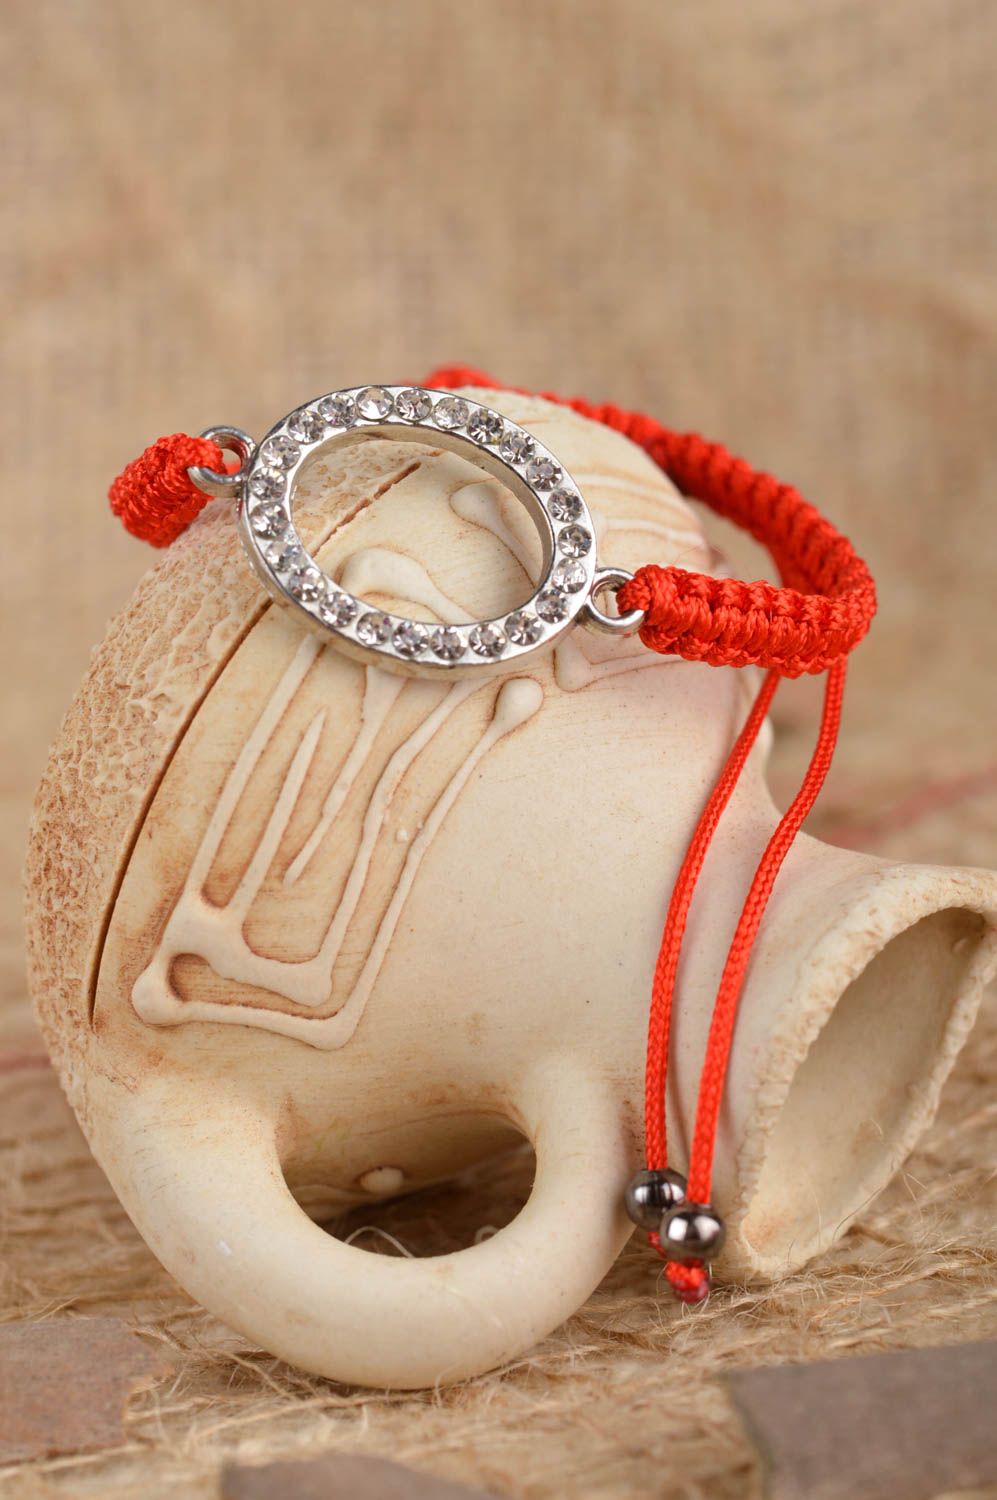 Unusual handmade thread bracelet friendship bracelet designs gifts for her photo 1